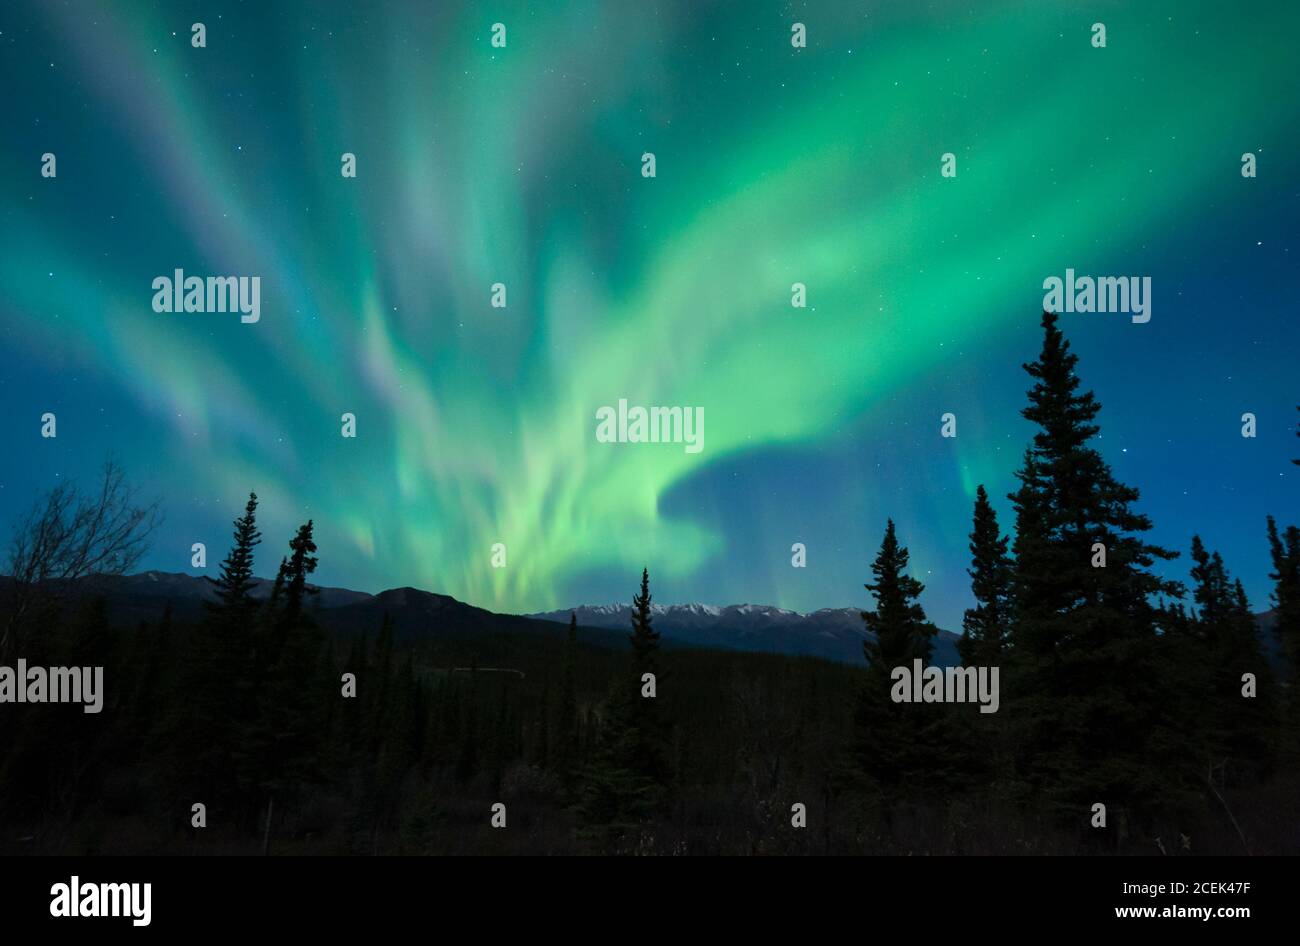 Nordamerika; USA; Alaska; Alaska Range Berge; Winter; Nacht; Sterne; Himmel; natürliches Phänomen; Aurora Borealis; Northern Lights. Stockfoto